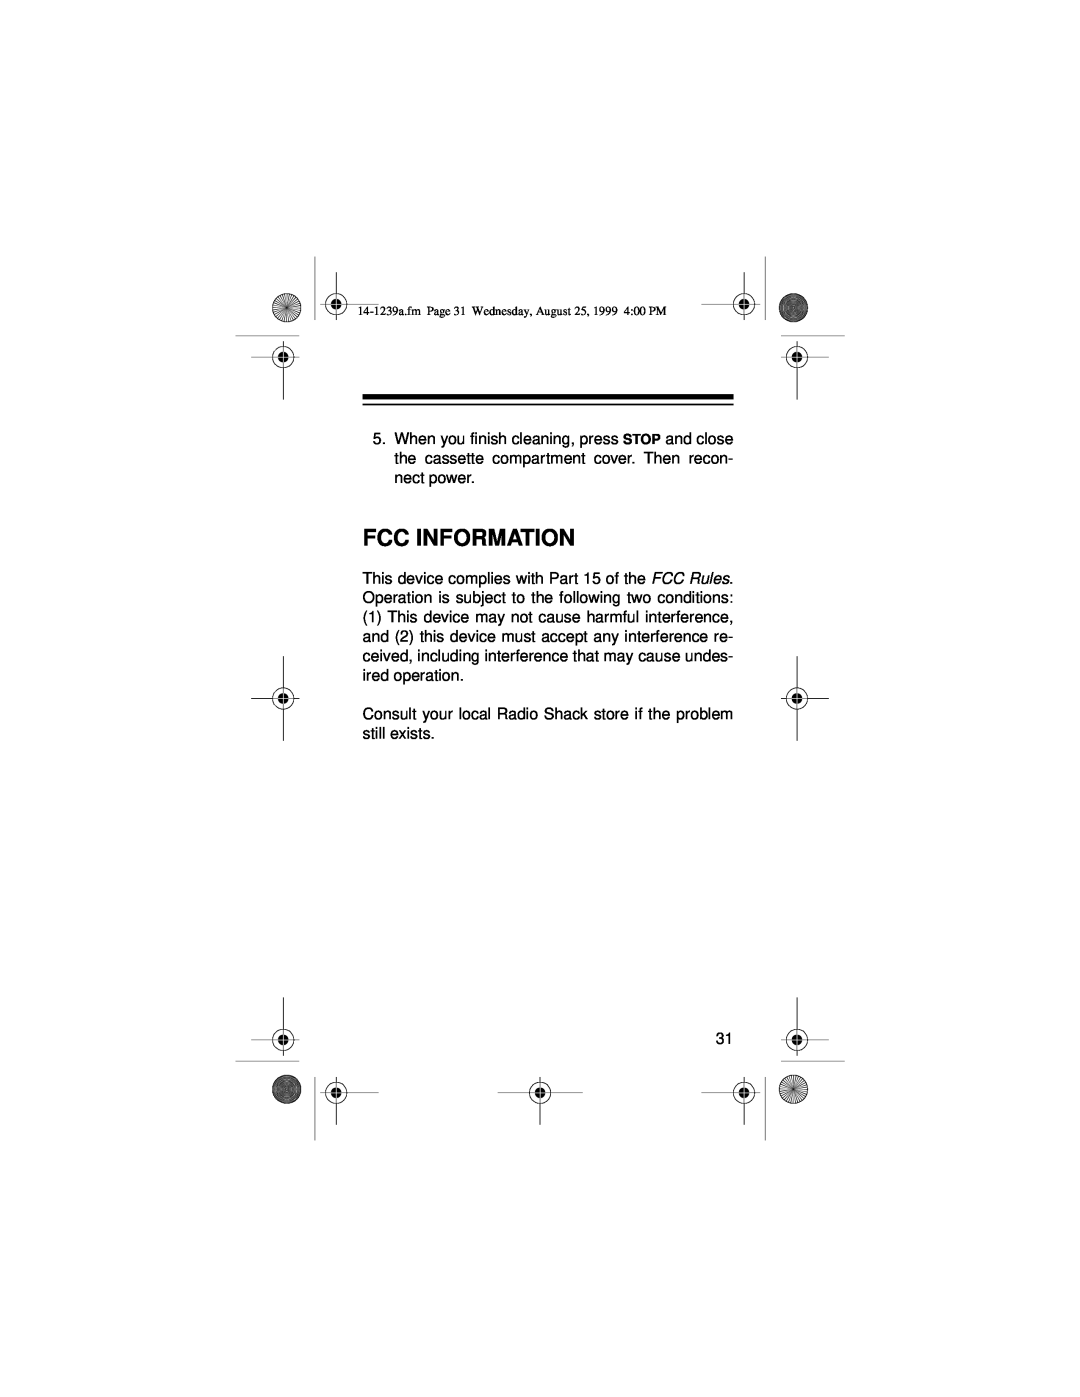 Optimus SCR-96 owner manual Fcc Information 